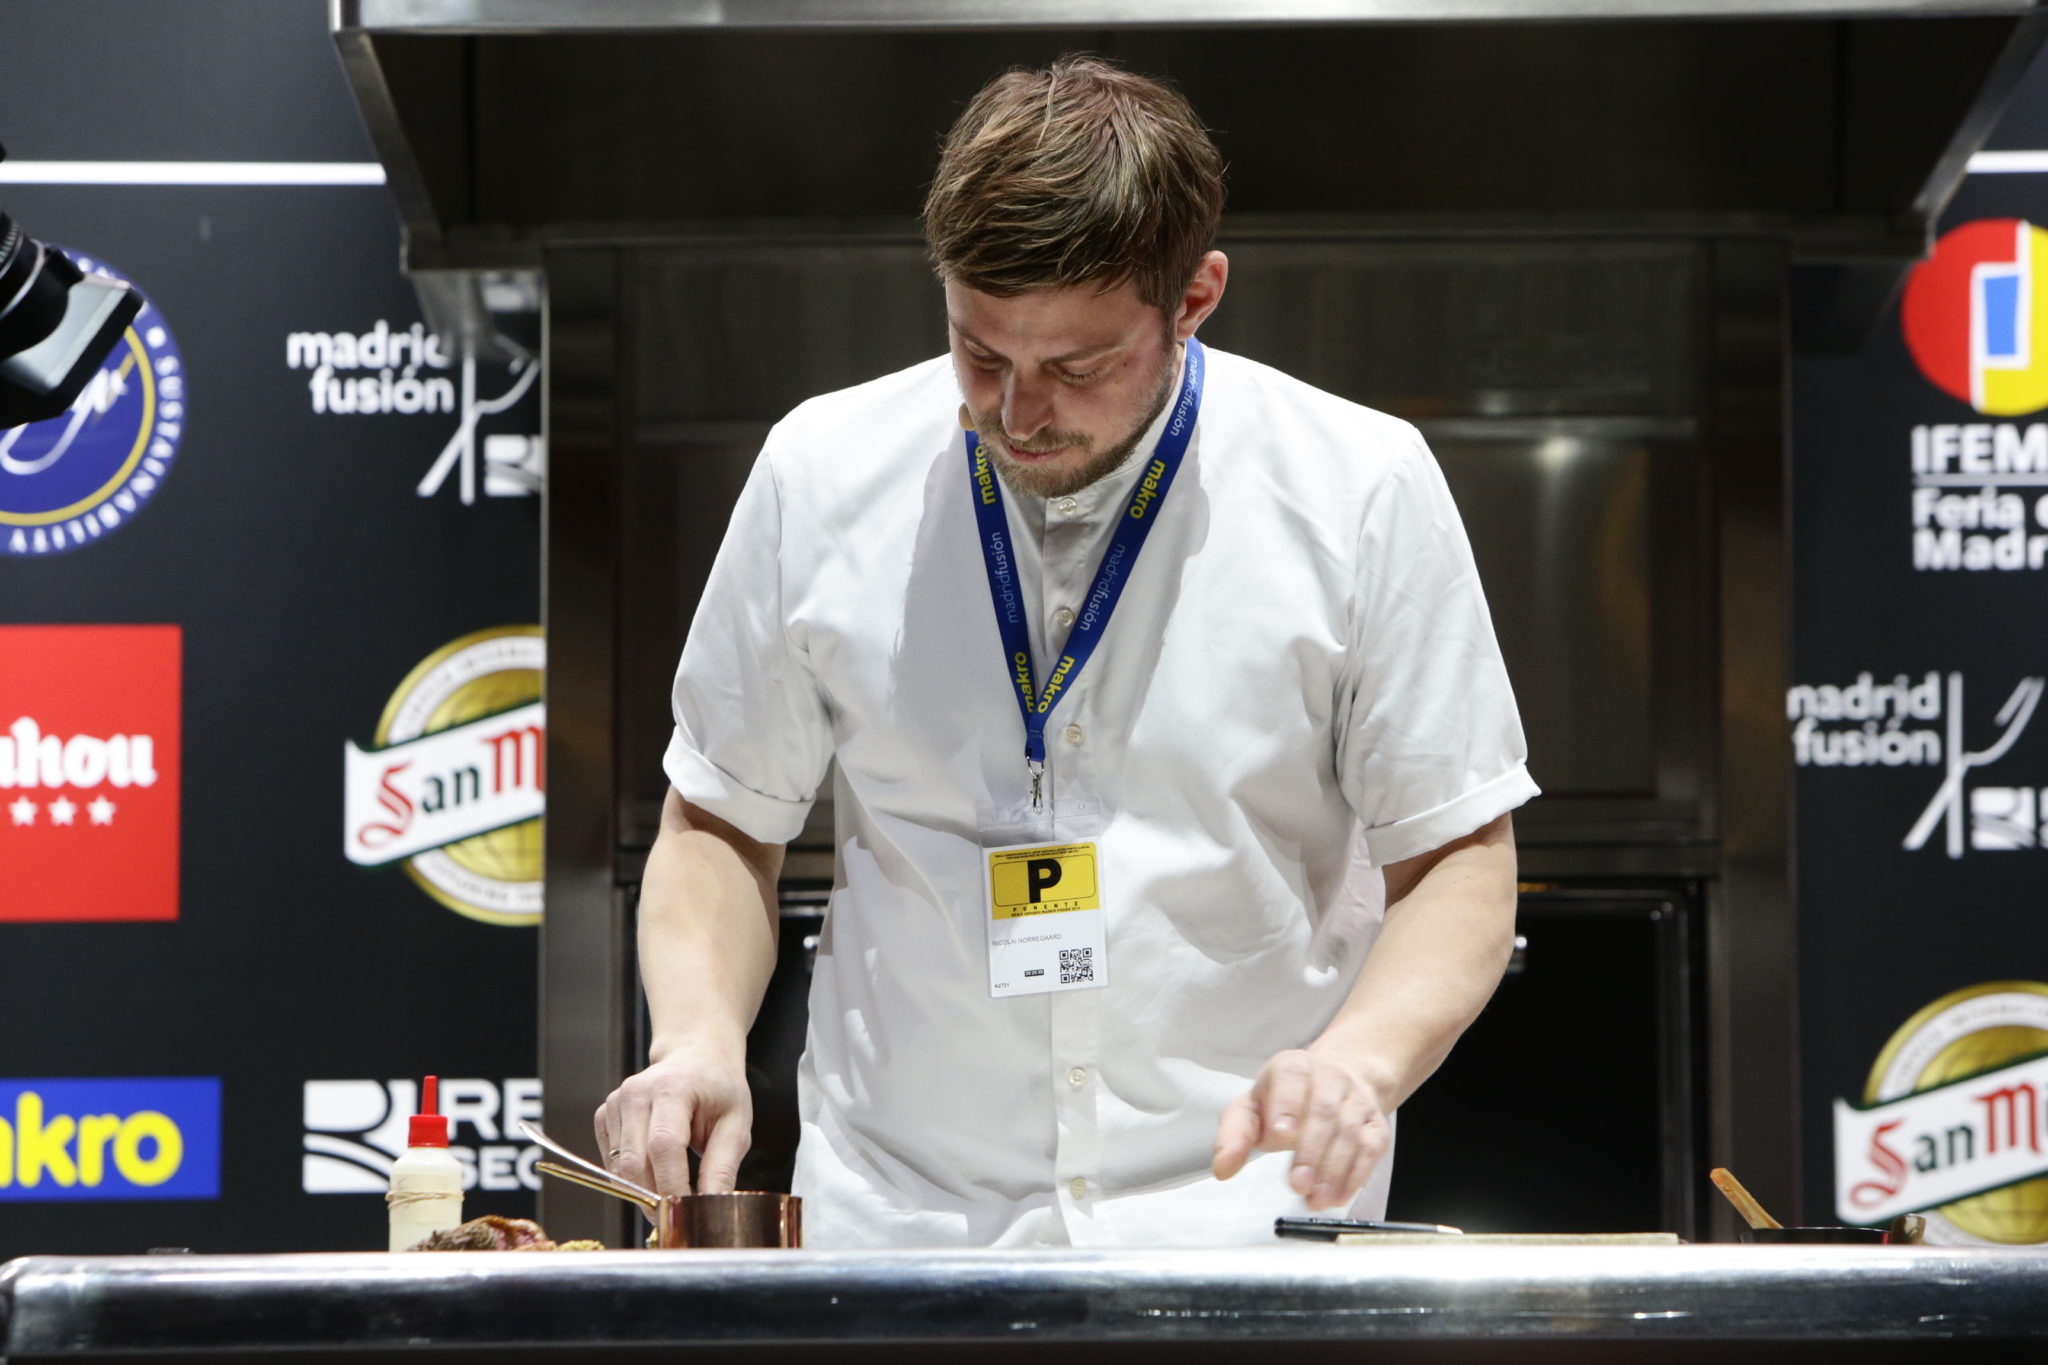 Danish chef Nicolai Norregard of Kadeau at Madrid Fusión